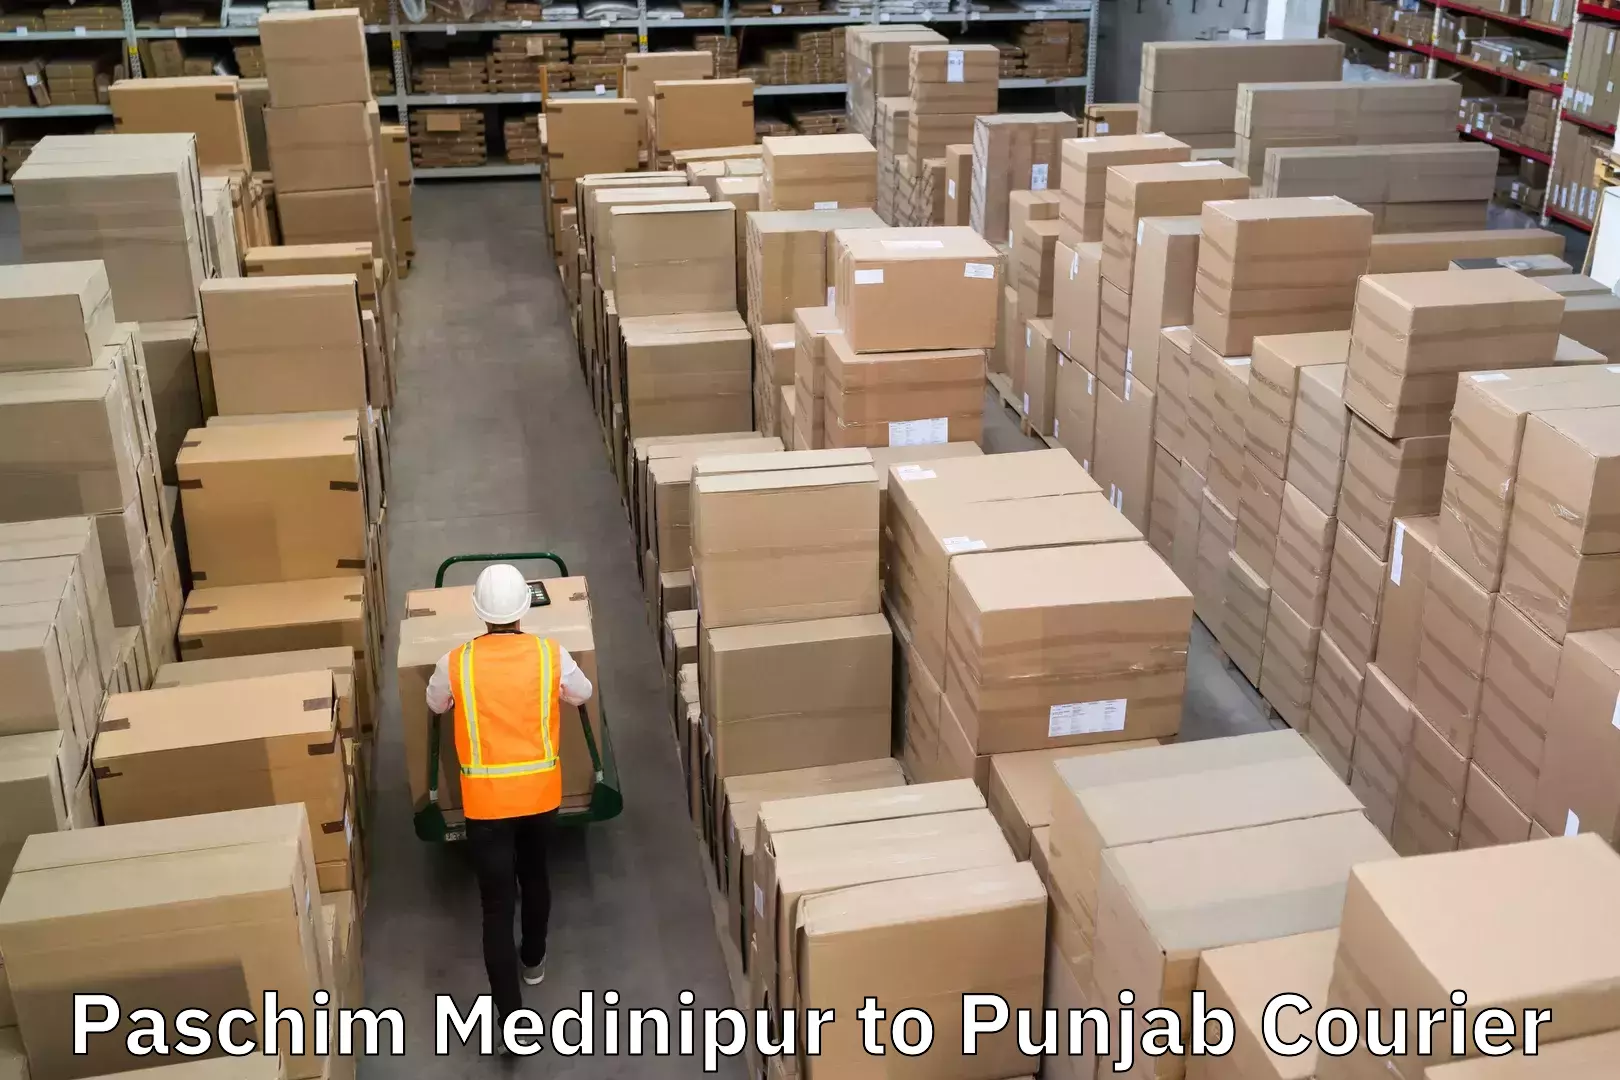 Logistics service provider Paschim Medinipur to Punjab